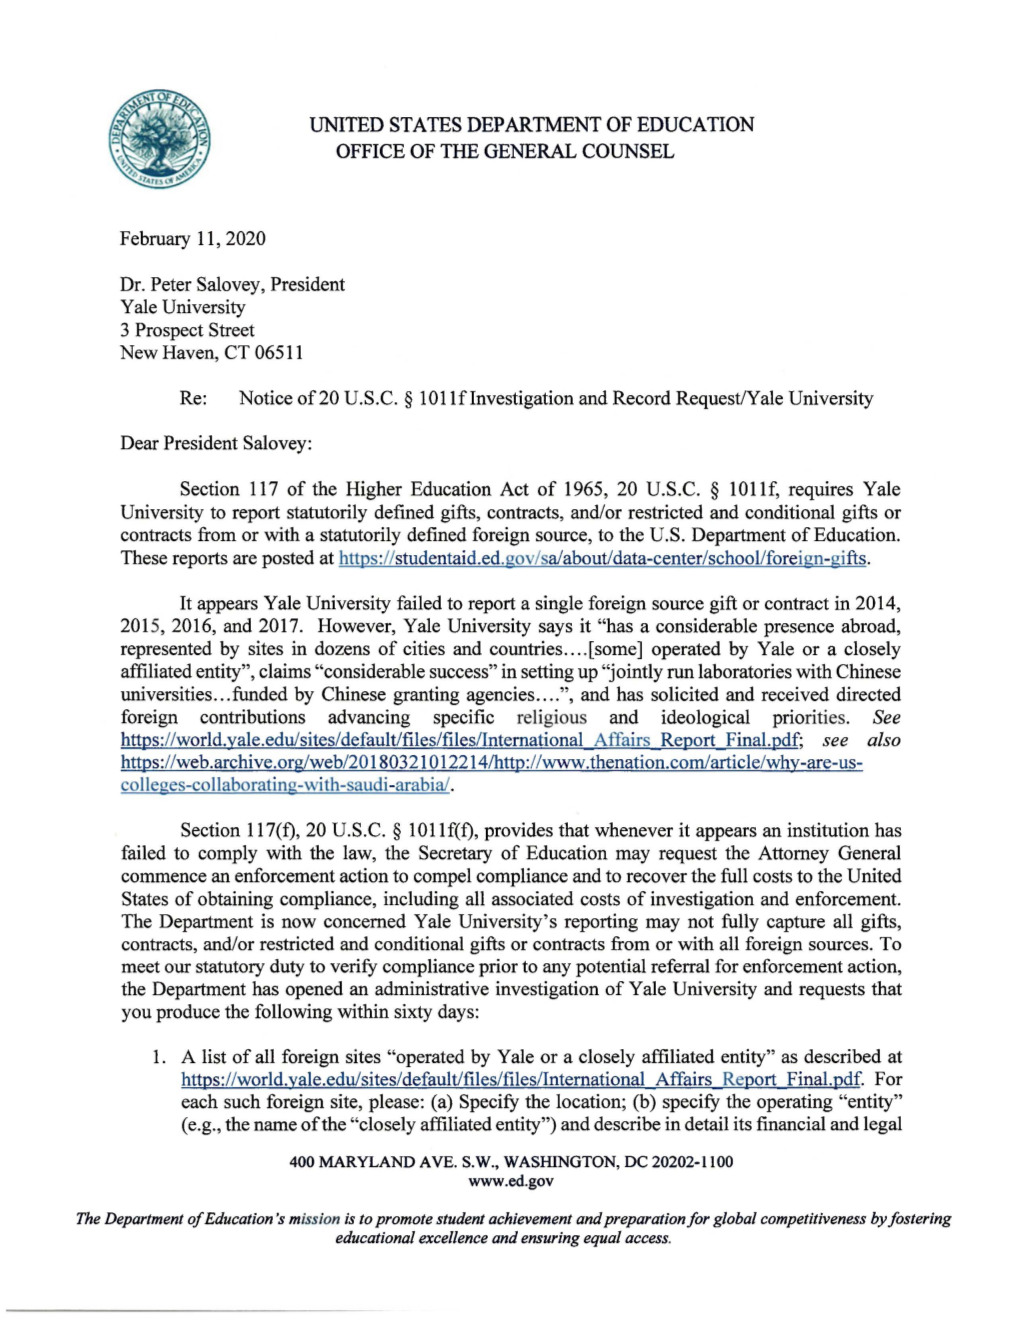 Letter to Yale University